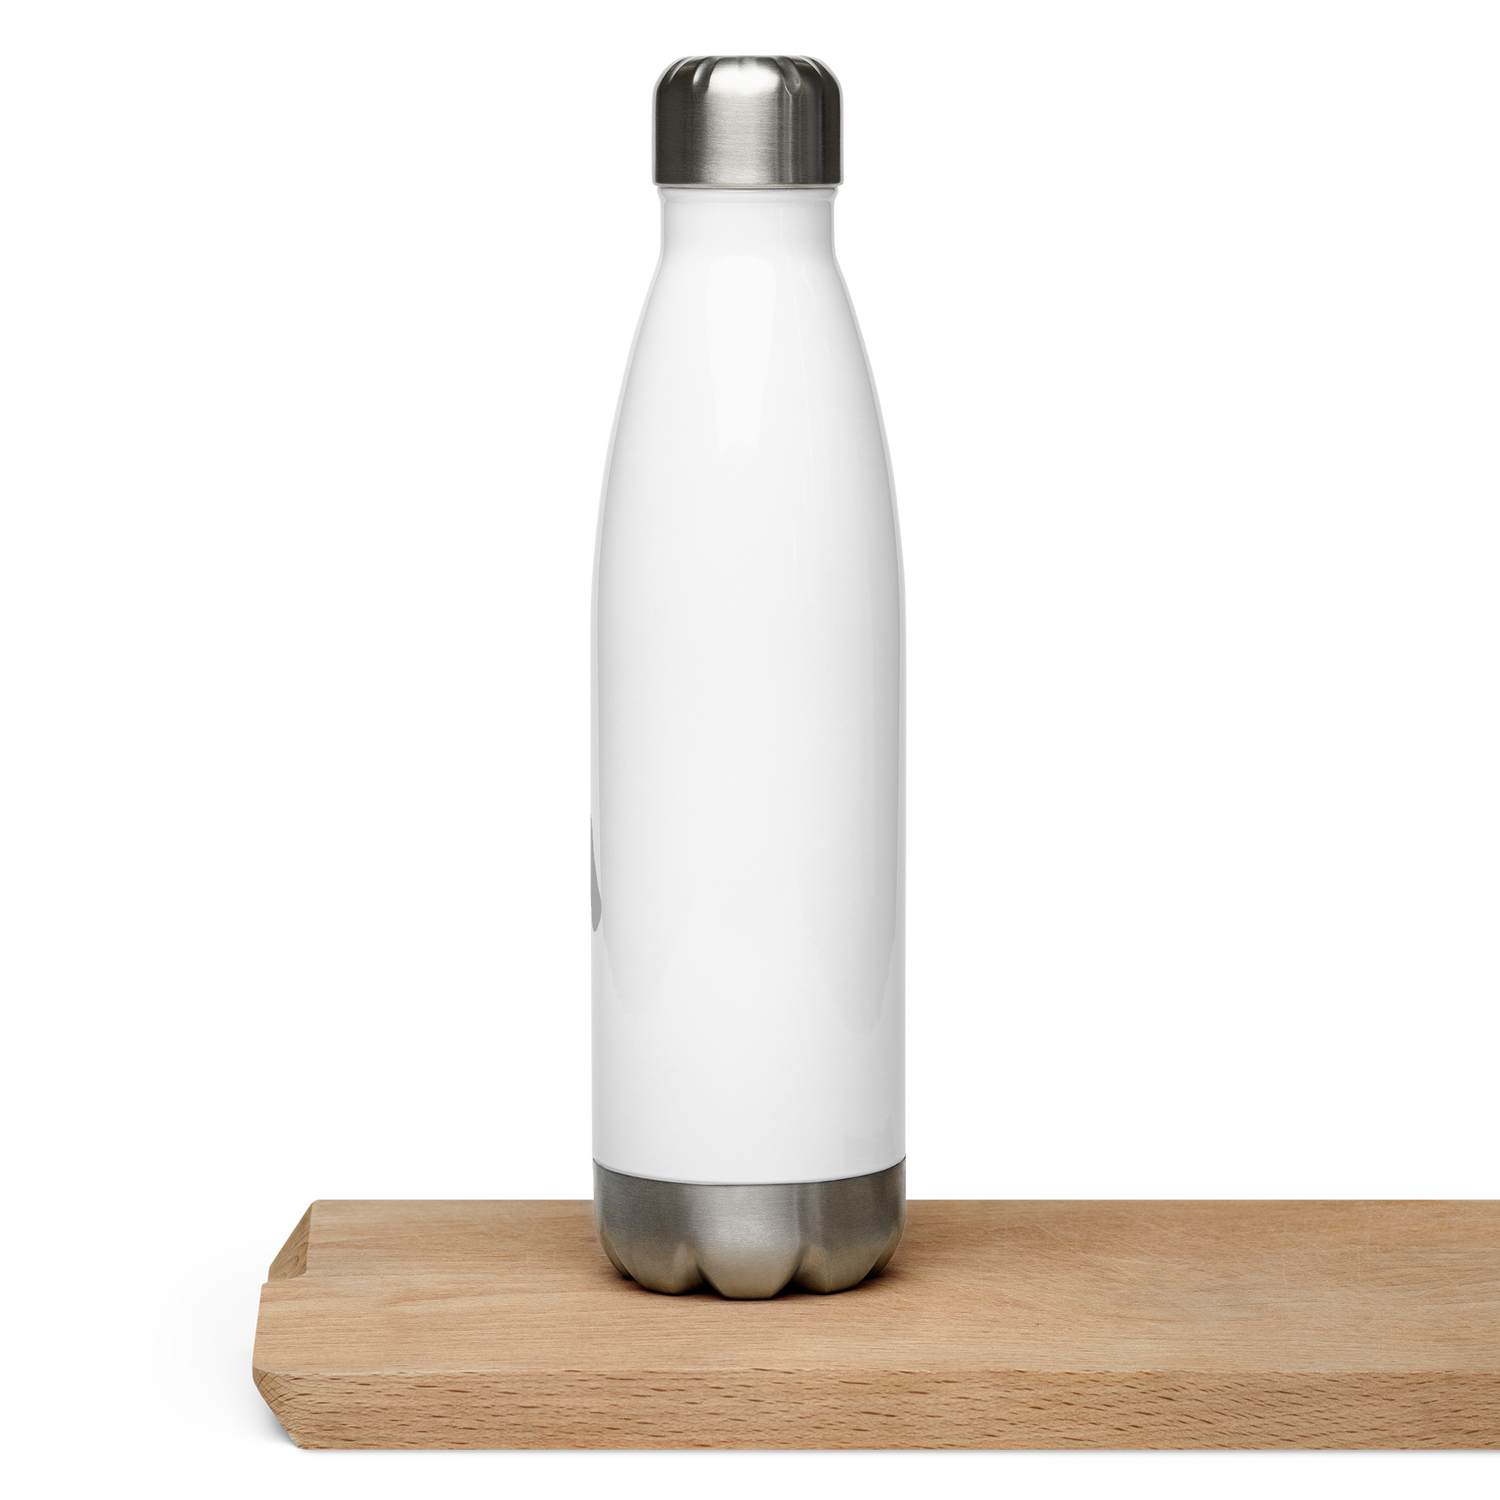 ARCAPRL Stainless Steel Water Bottle